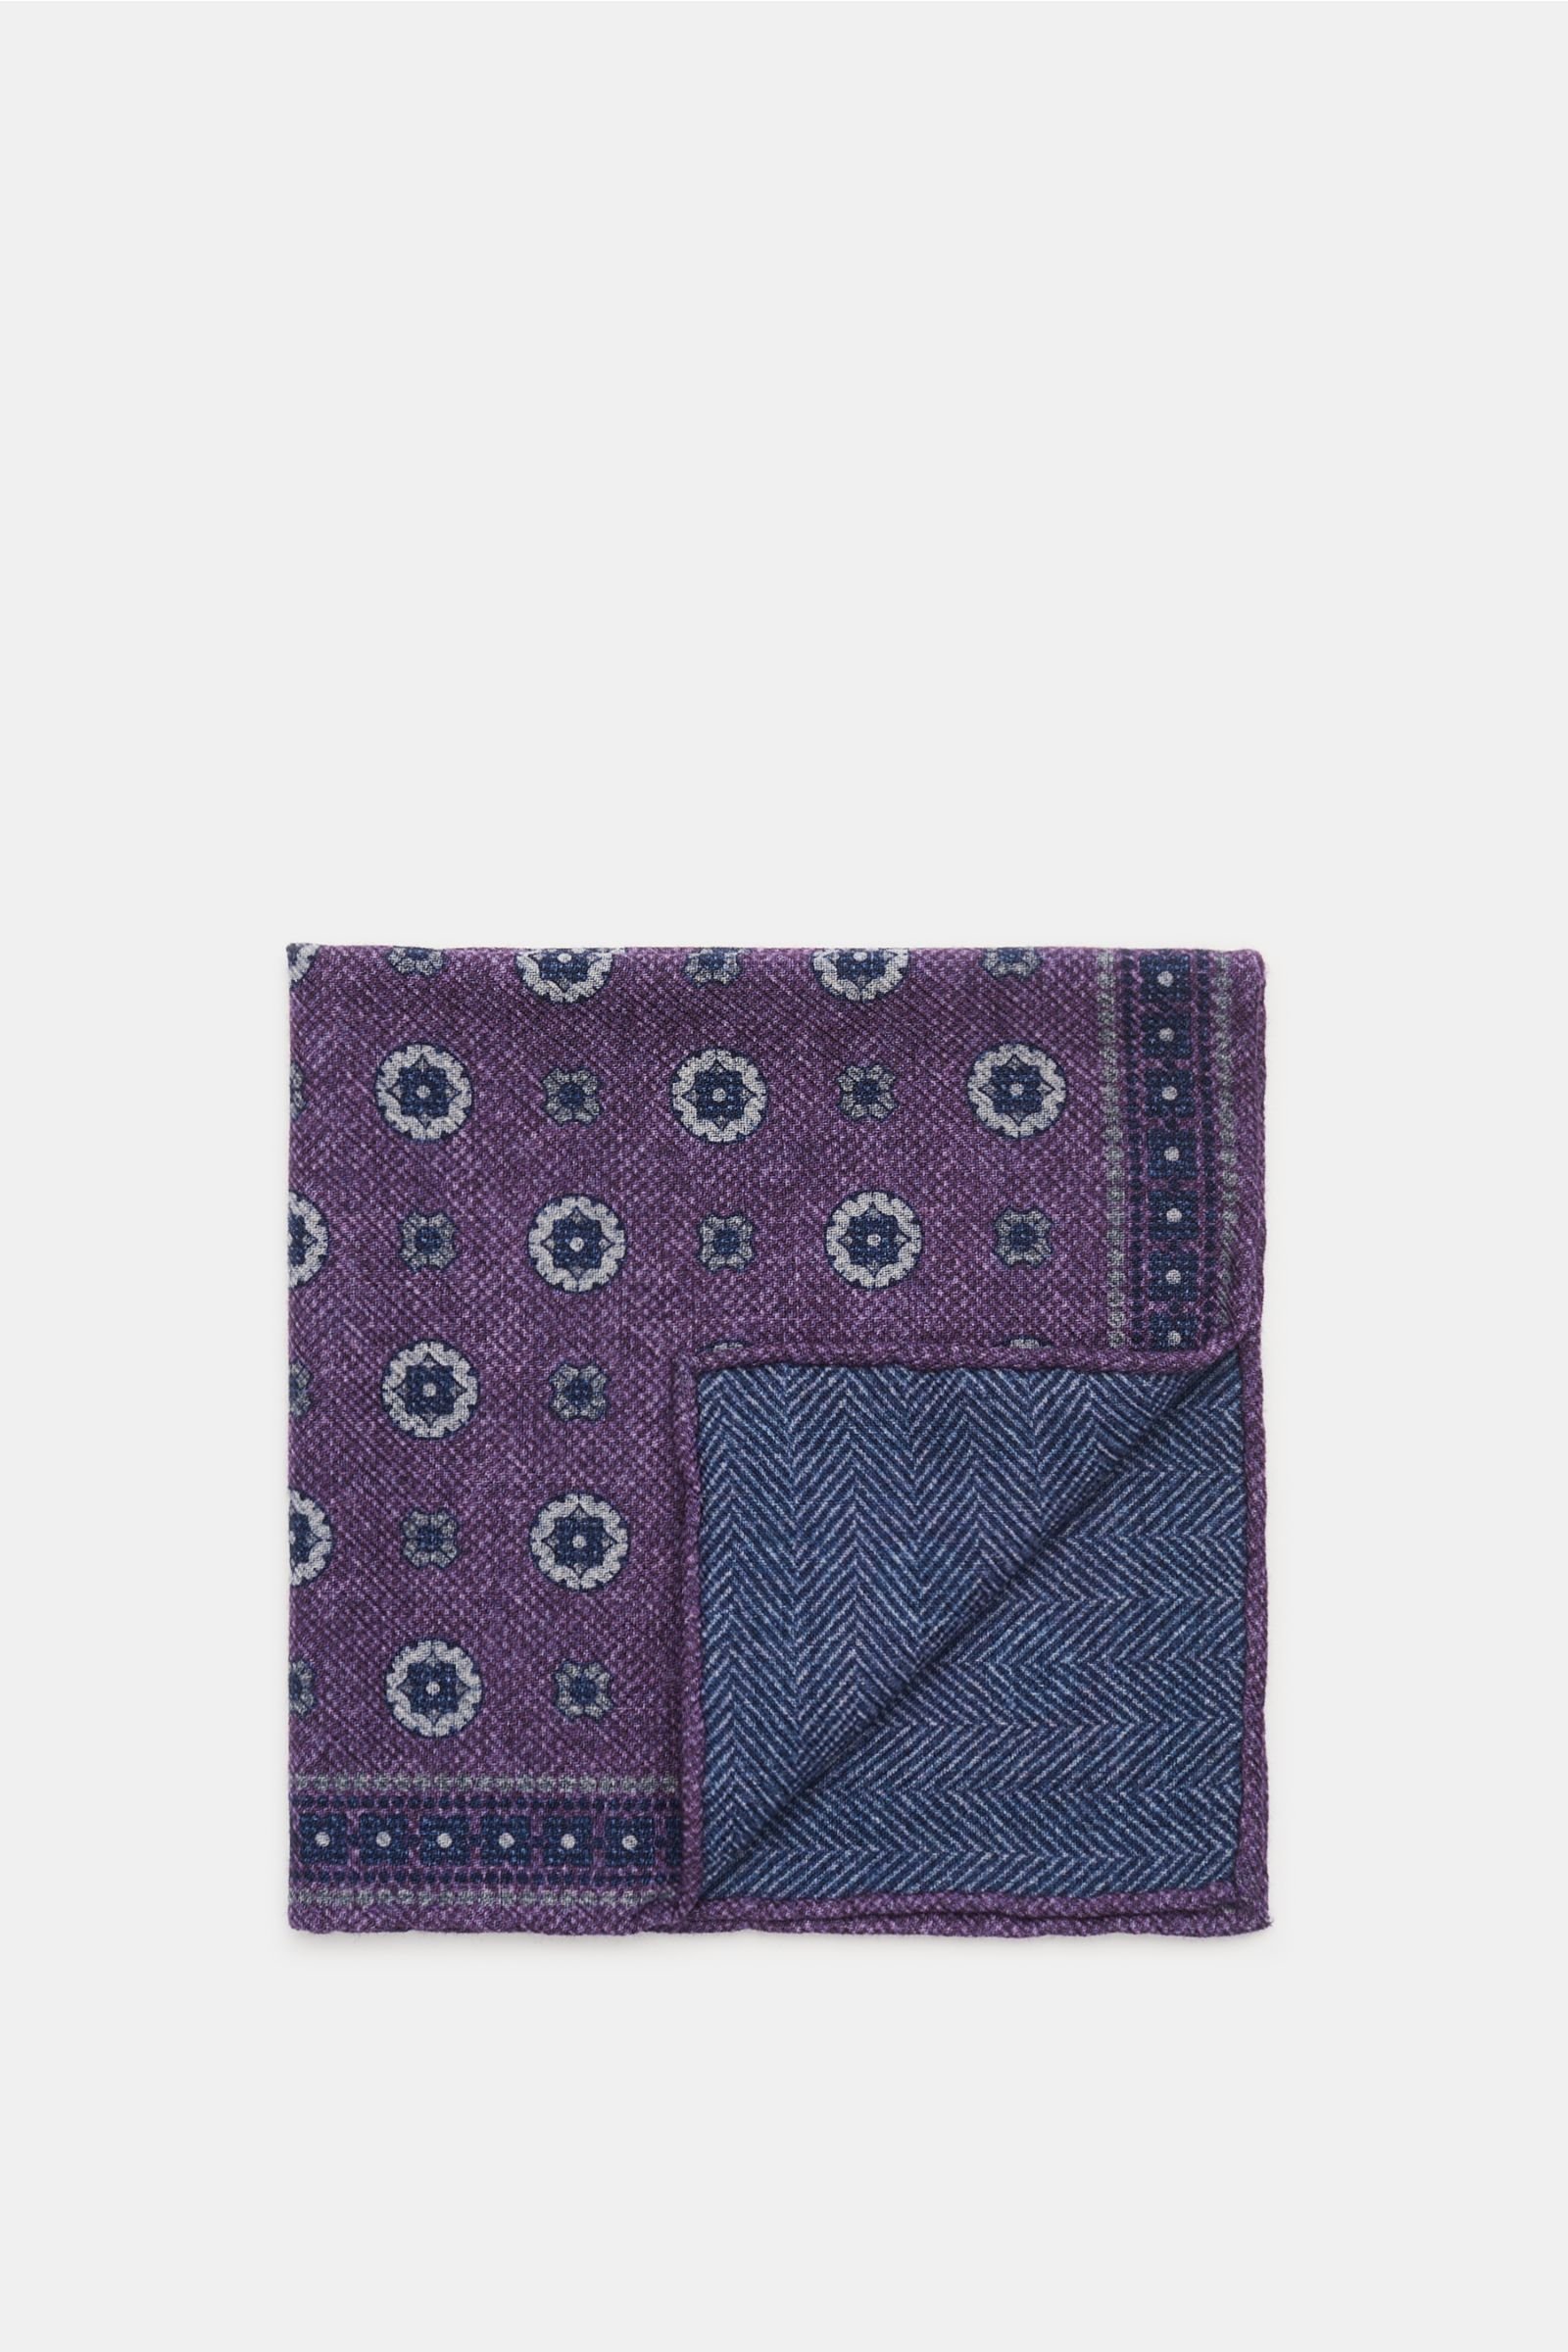 Pocket square purple/navy patterned